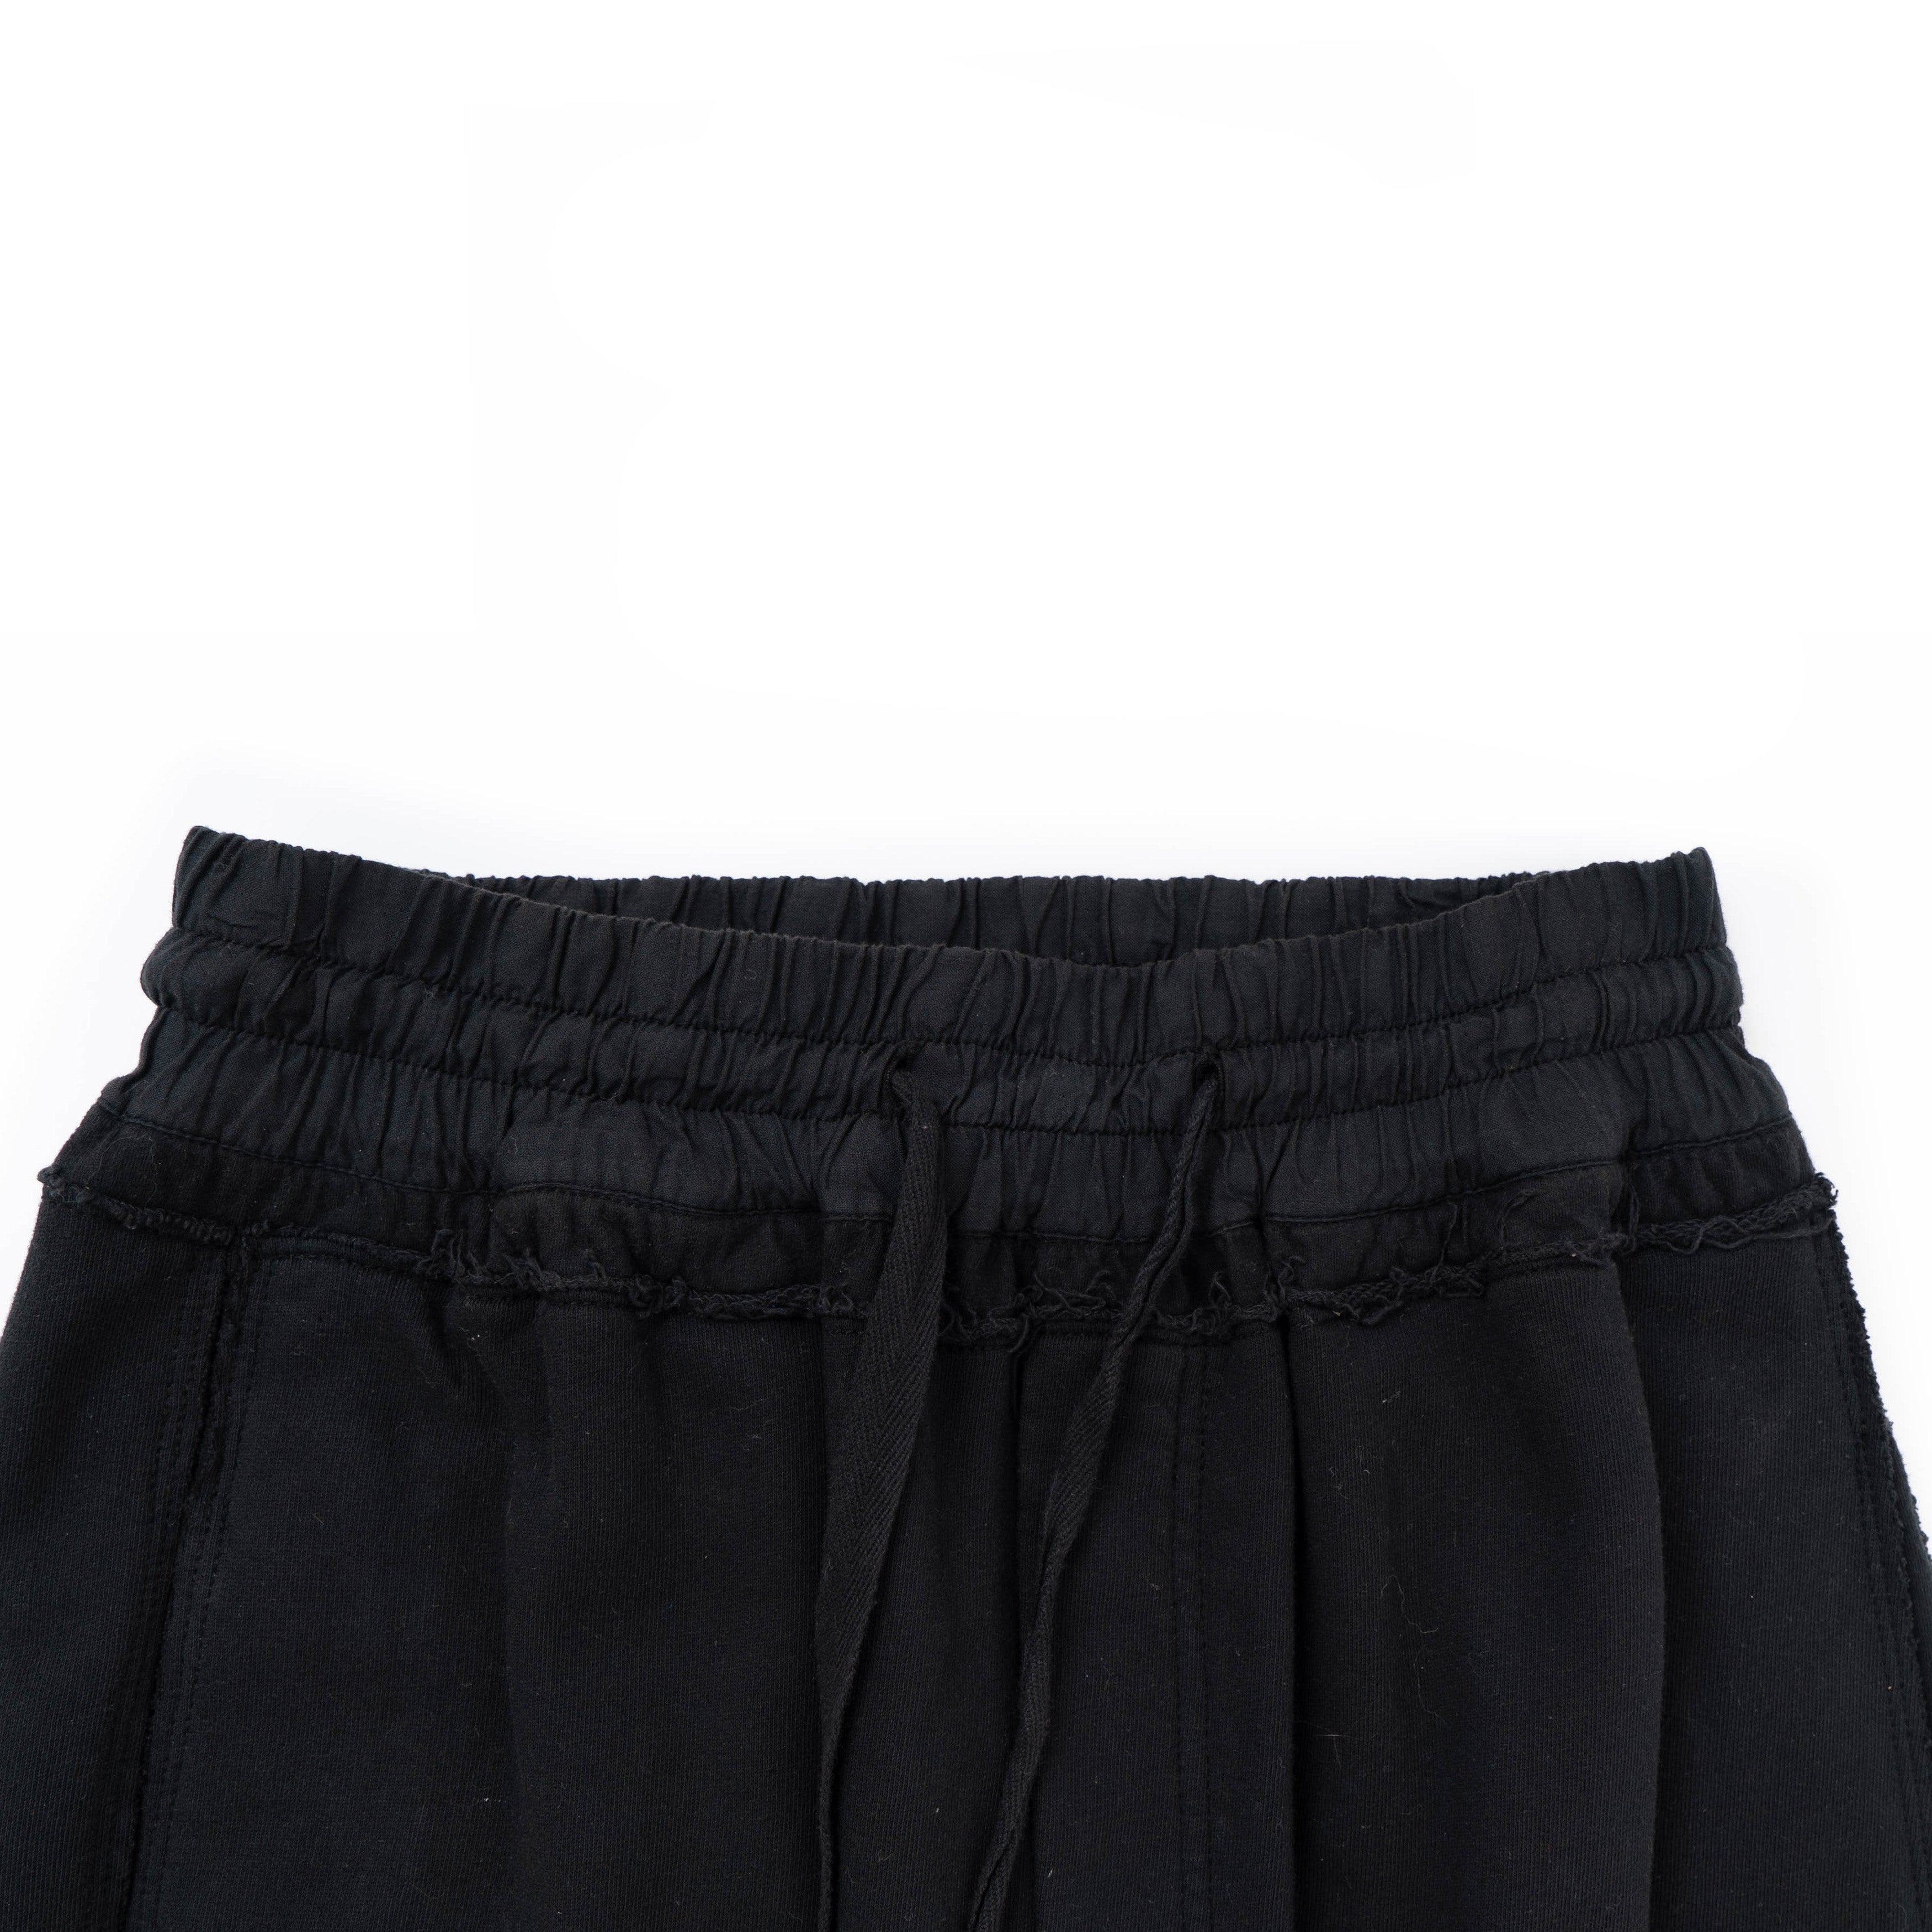 SS18 Distressed Black Sweatpants 1 of 1 Sample